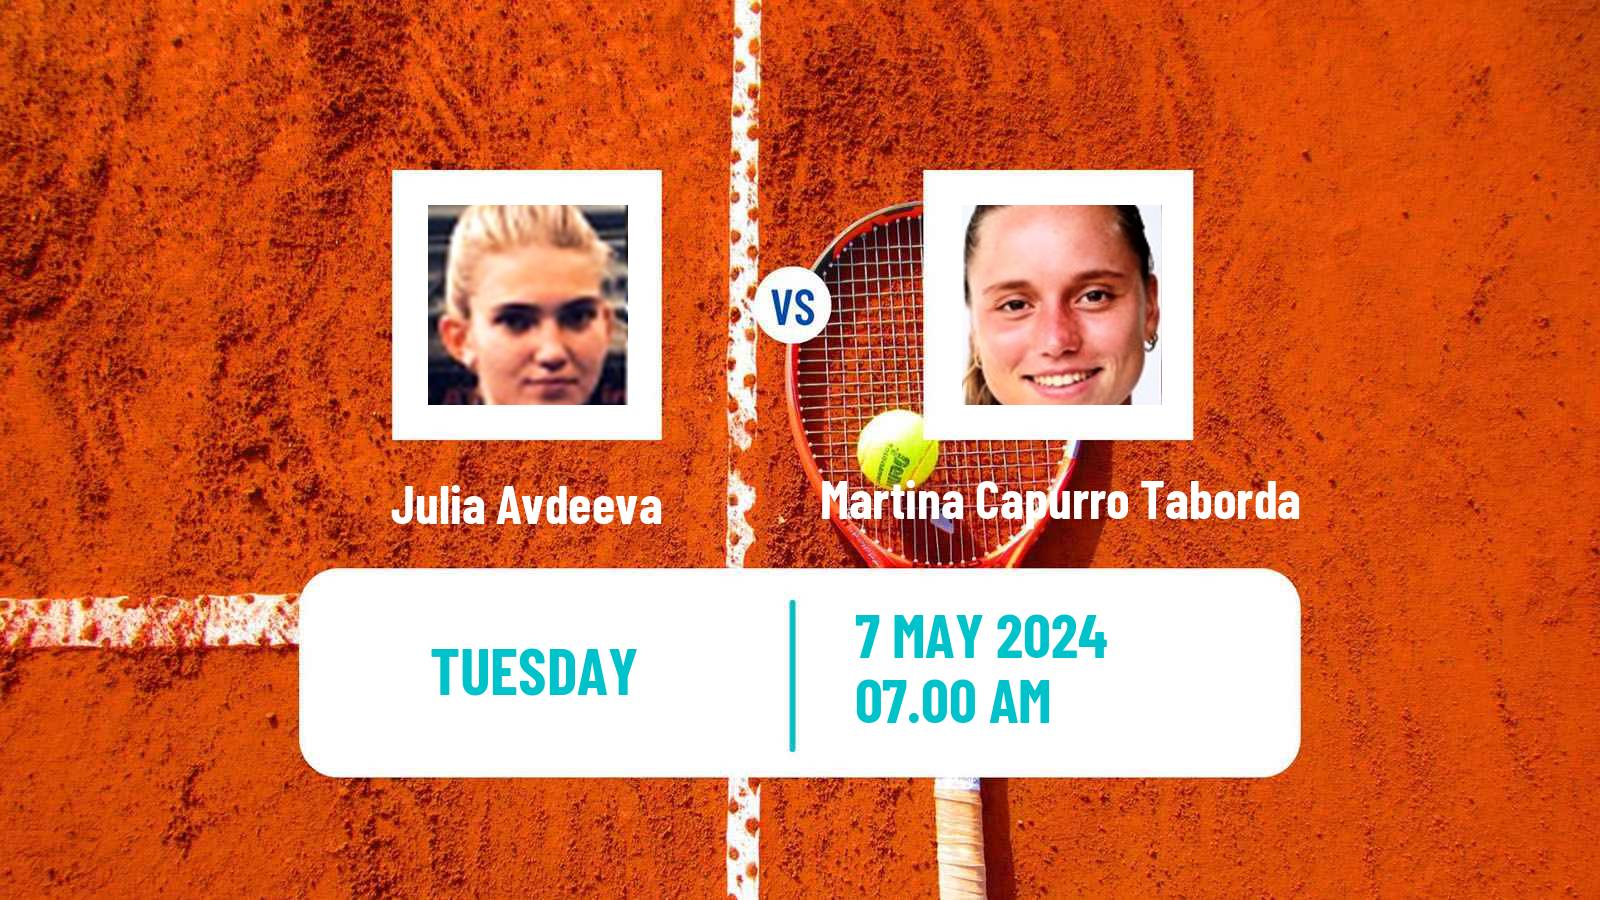 Tennis ITF W75 Trnava 2 Women Julia Avdeeva - Martina Capurro Taborda